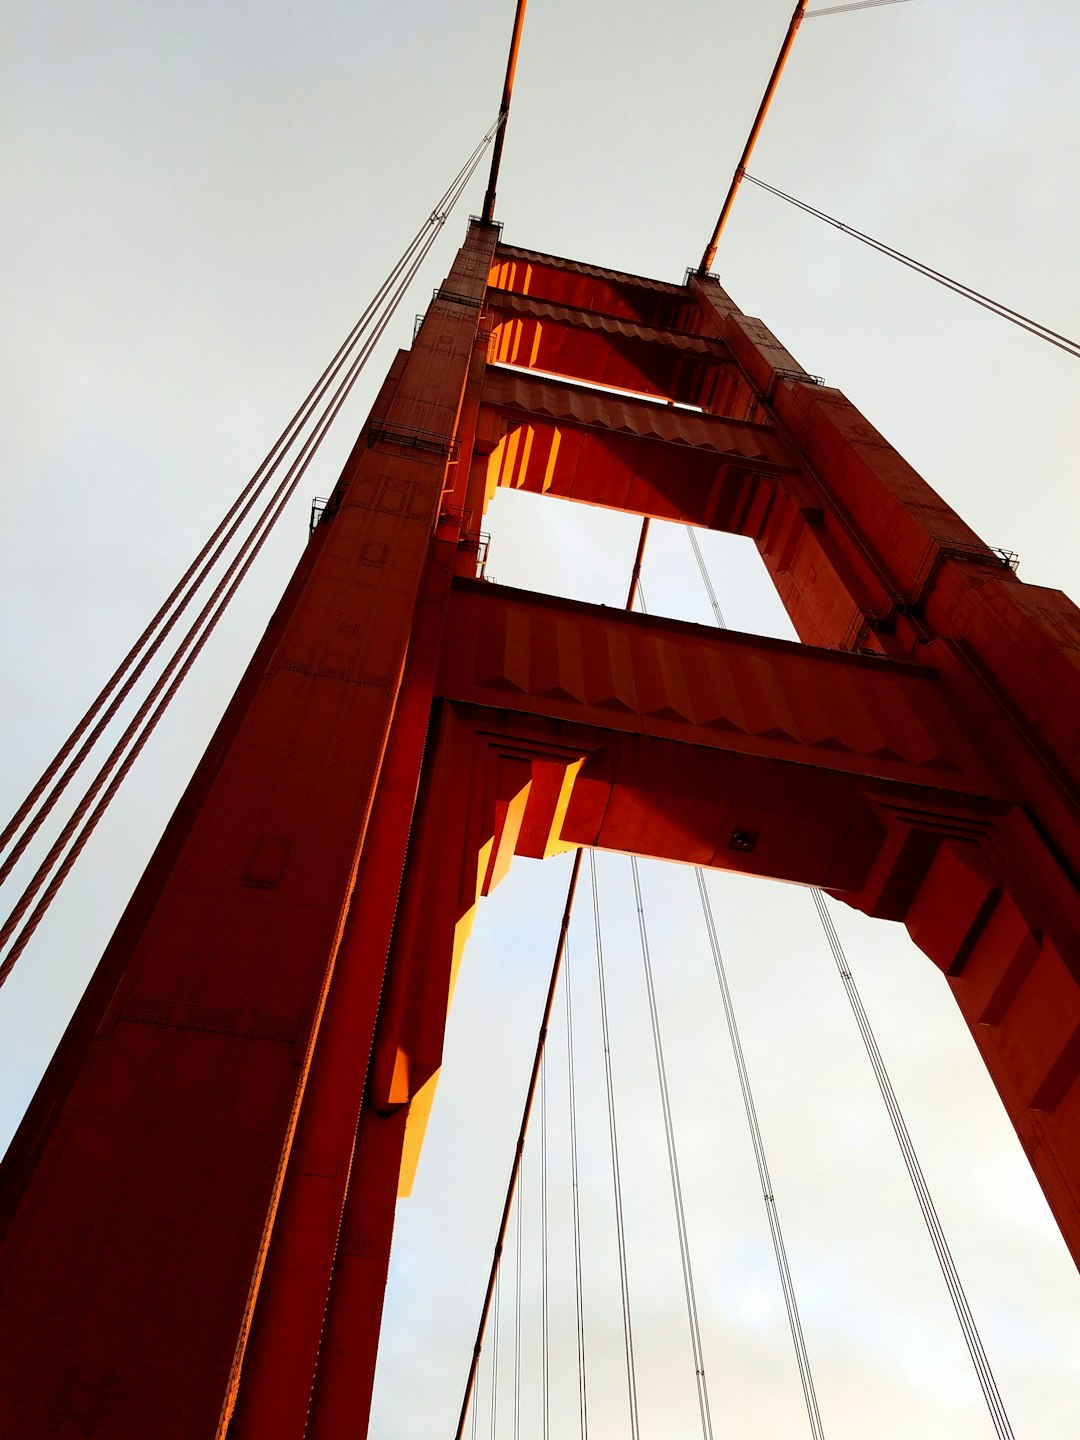 Suspension bridge photo spot Golden Gate National Recreation Area Golden Gate Bridge